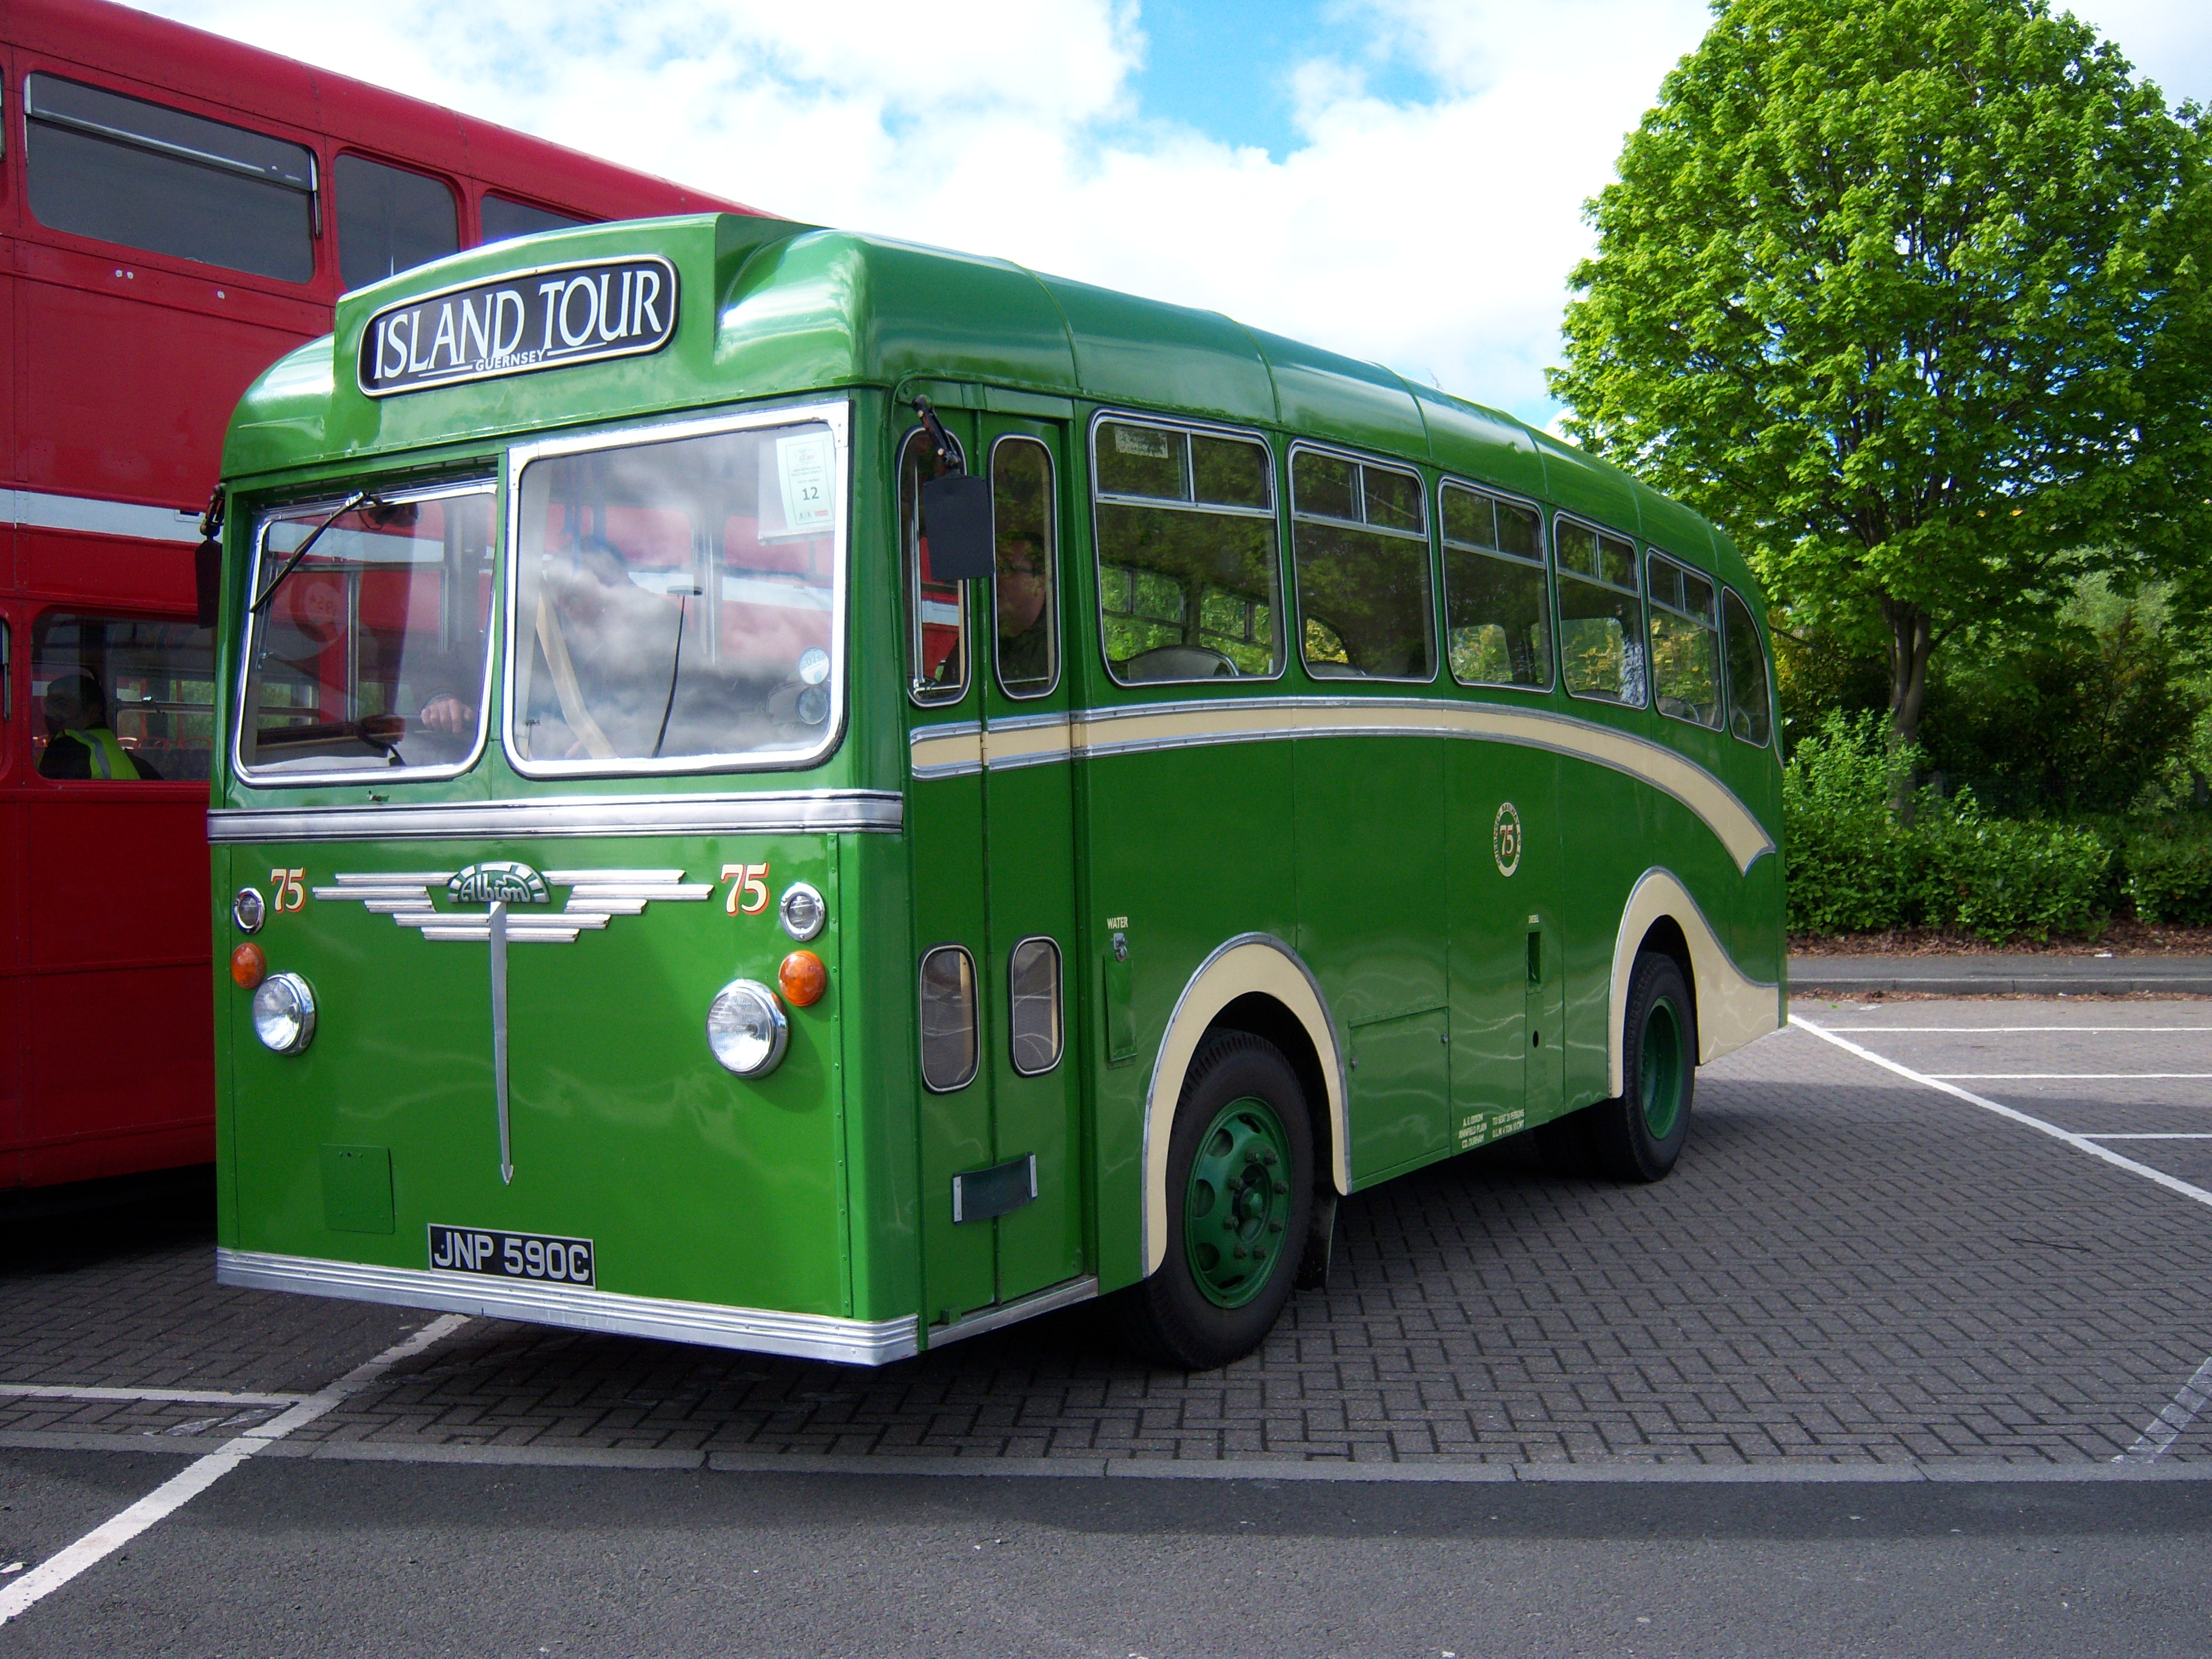 Guernsey_tour_bus_75_Albion_Nimbus_JNP_590C_Metrocentre_rally_2009_pic_3.JPG